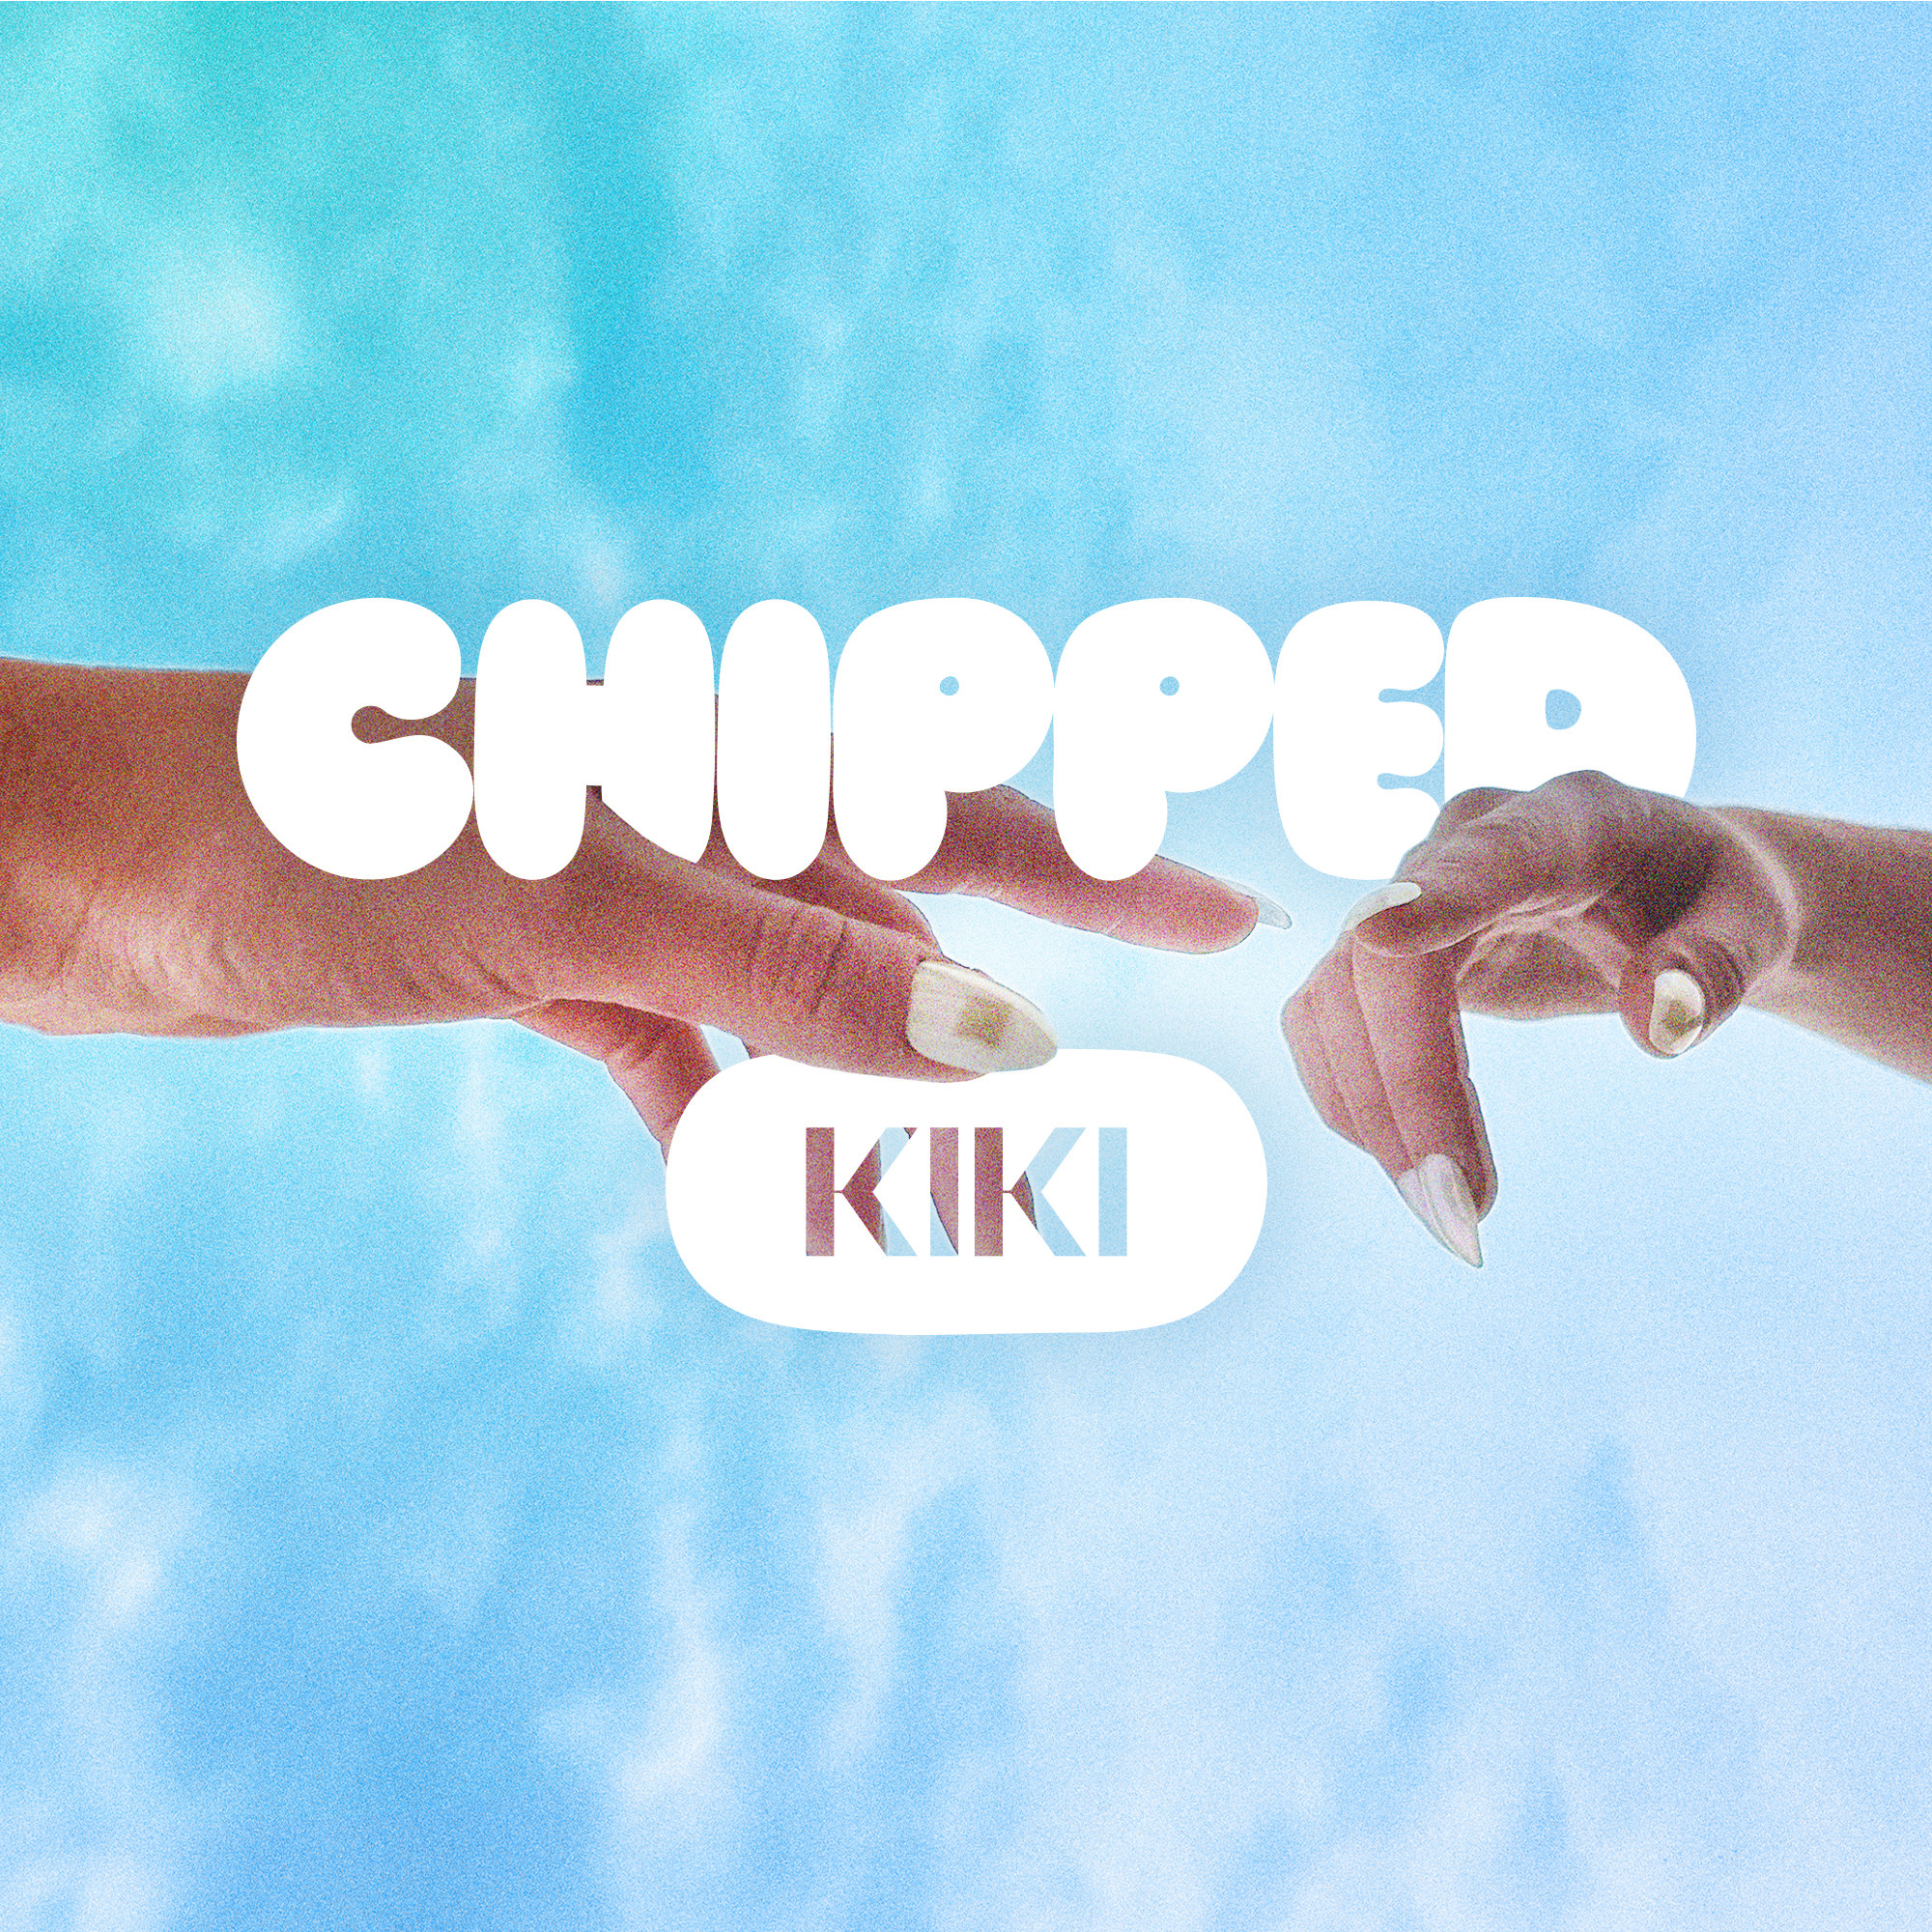 KIKI World Chipped Nails